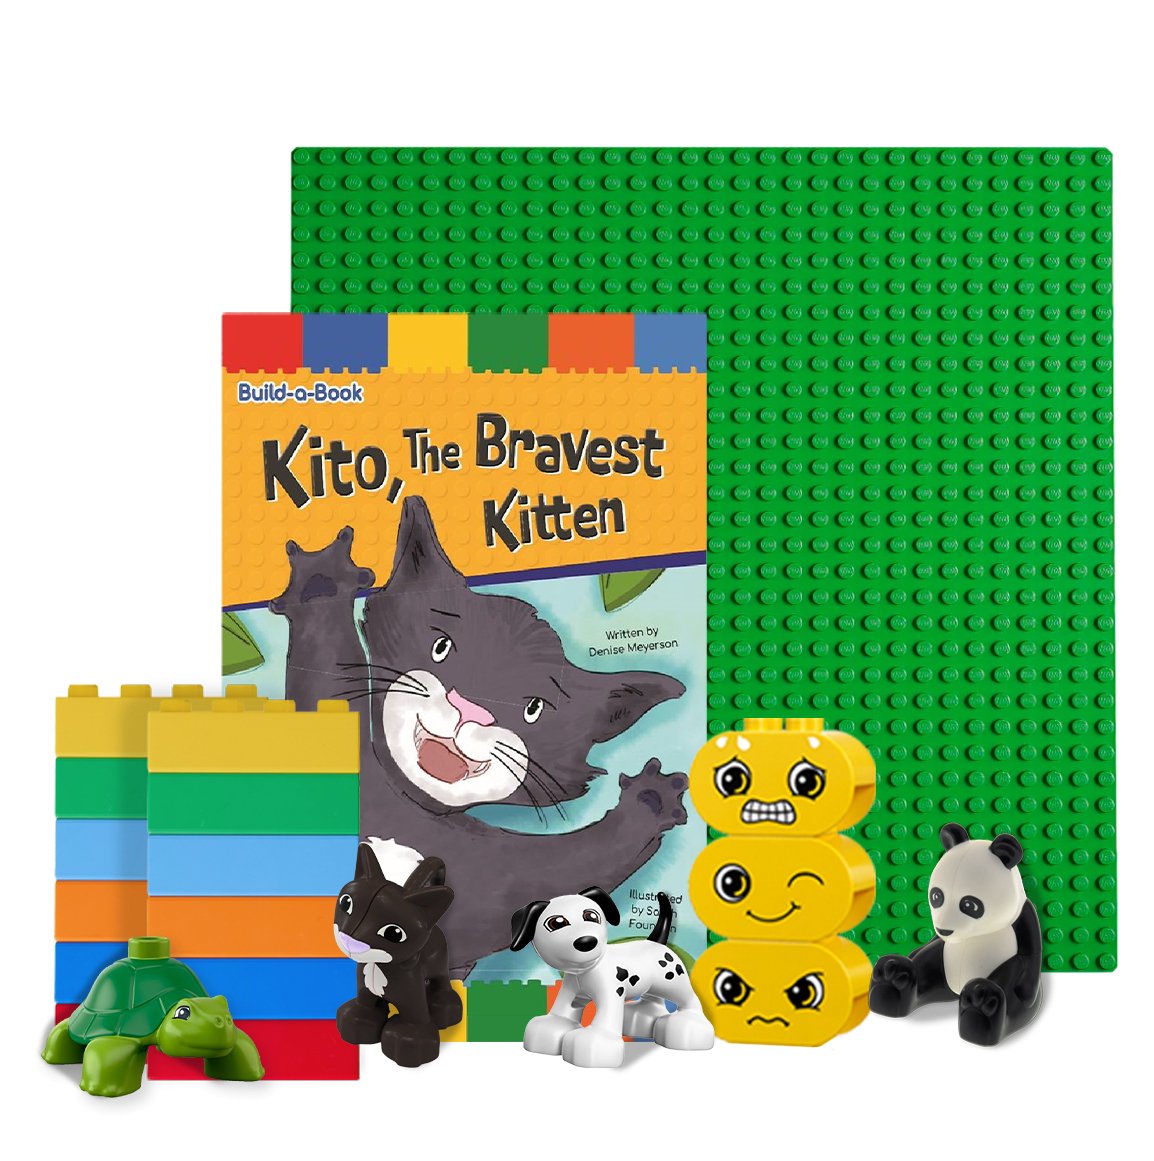 Kito, the Bravest Kitten - Book and Bricks Set